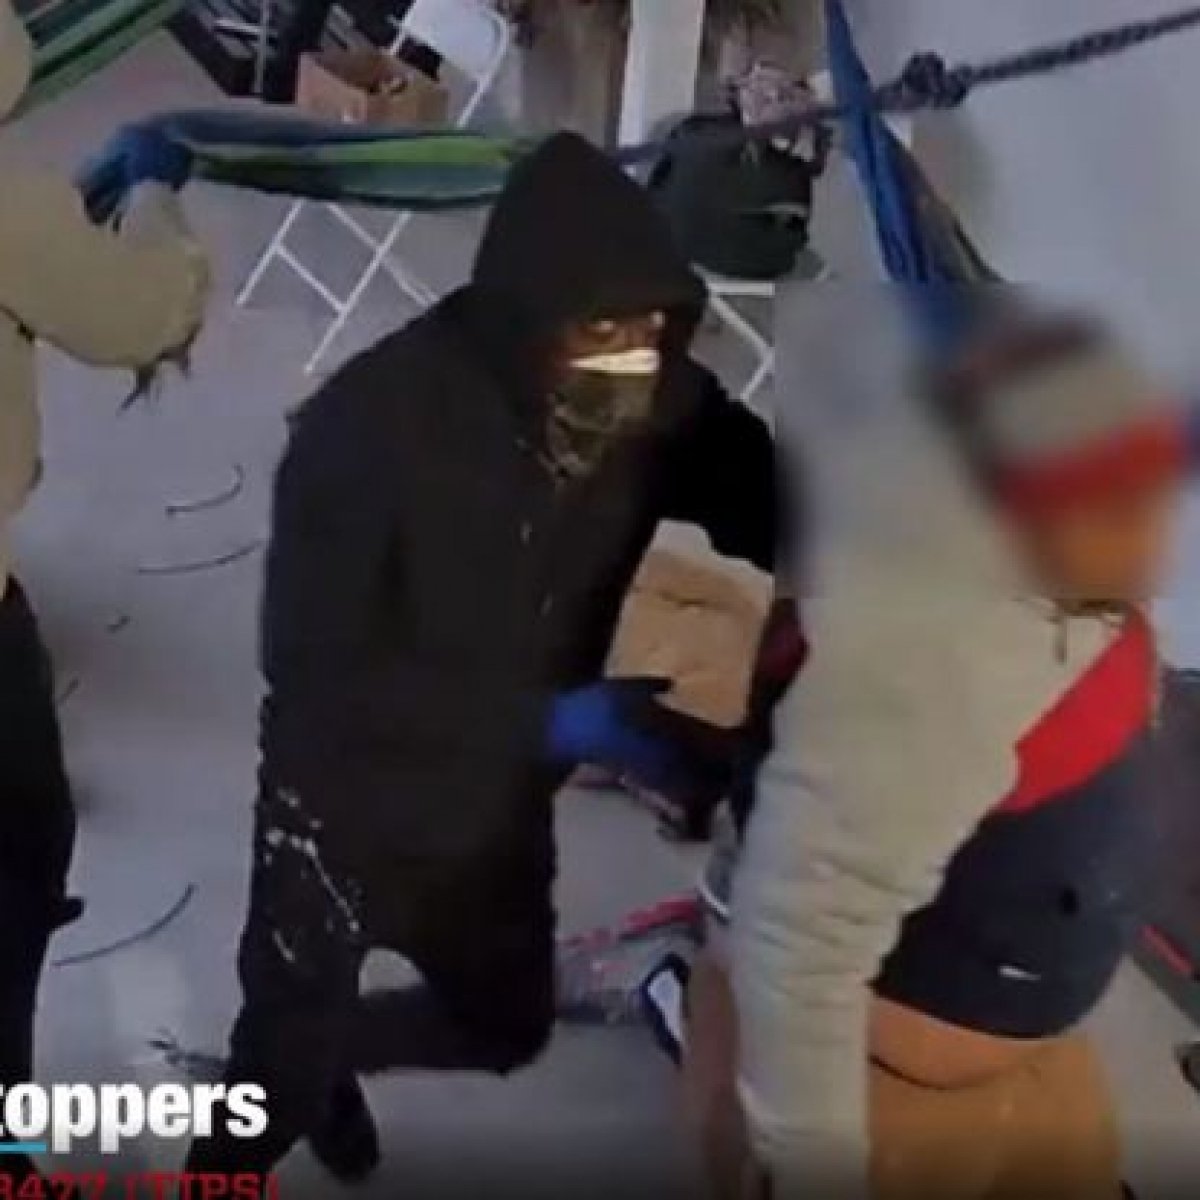 SEE IT: Armed robbers tie up five people, steal $40,000 in harrowing Queens home invasion